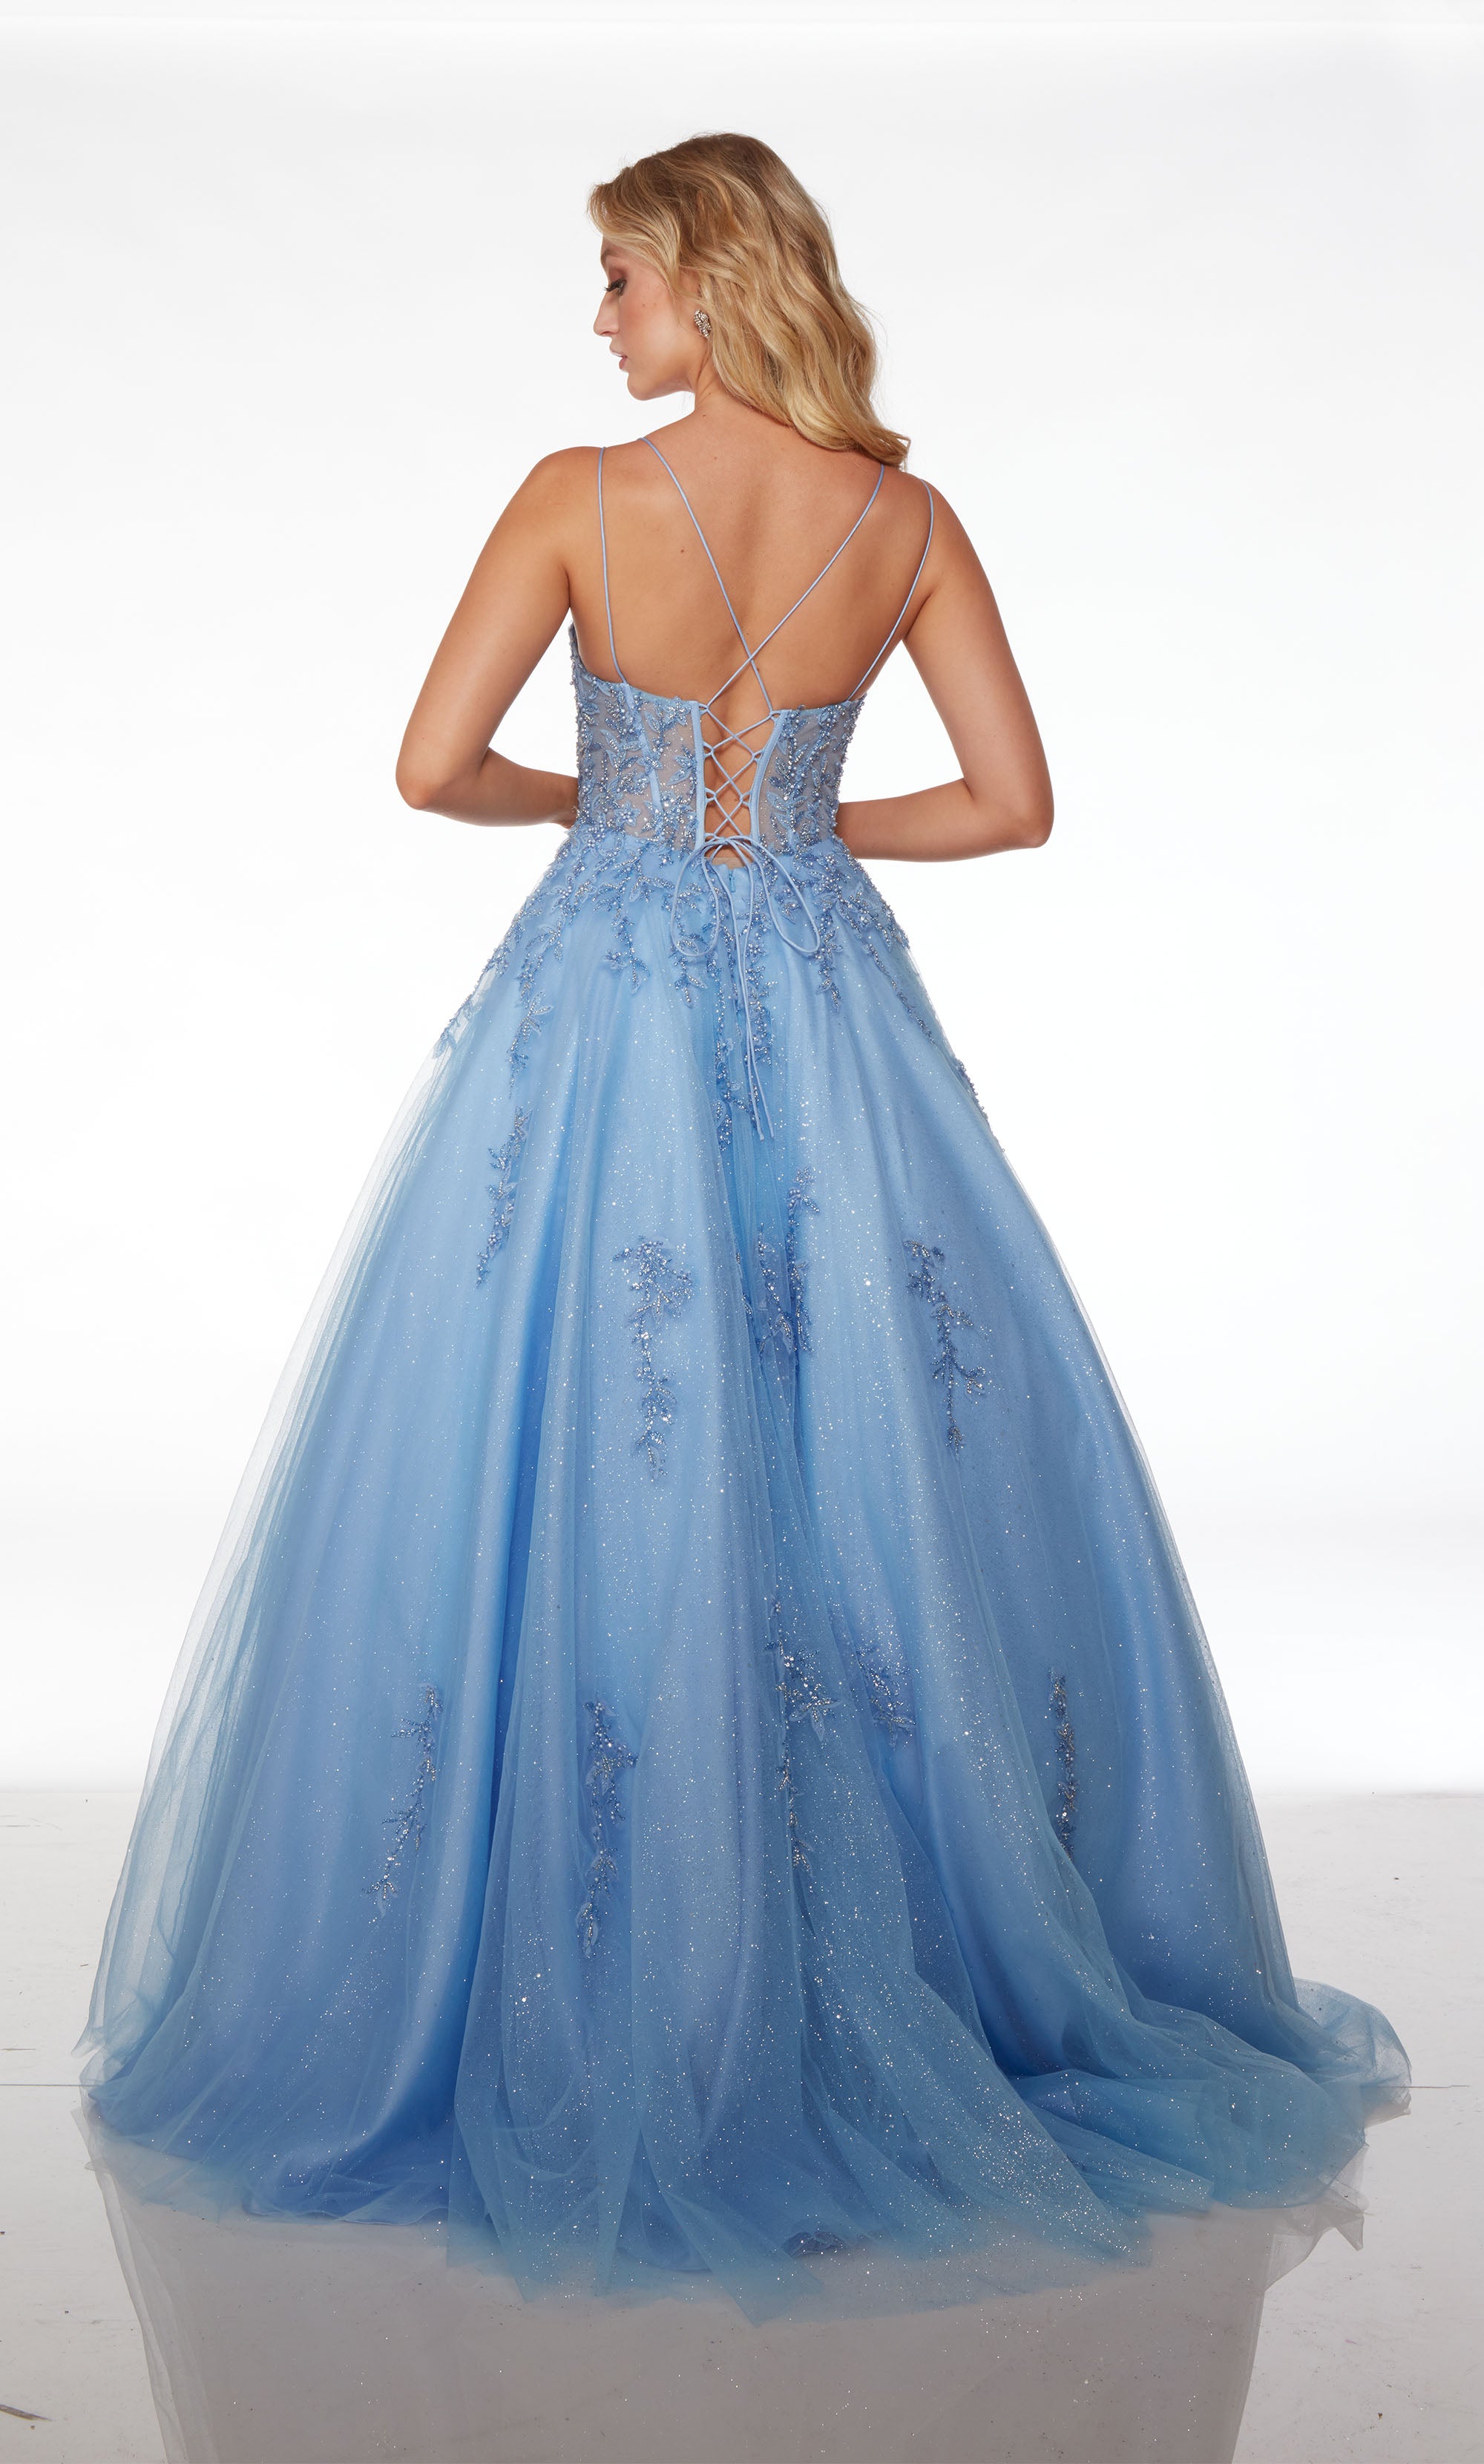 Alice Sky Blue Wedding Dress, Short Kawaii Corset Dress in Tulle